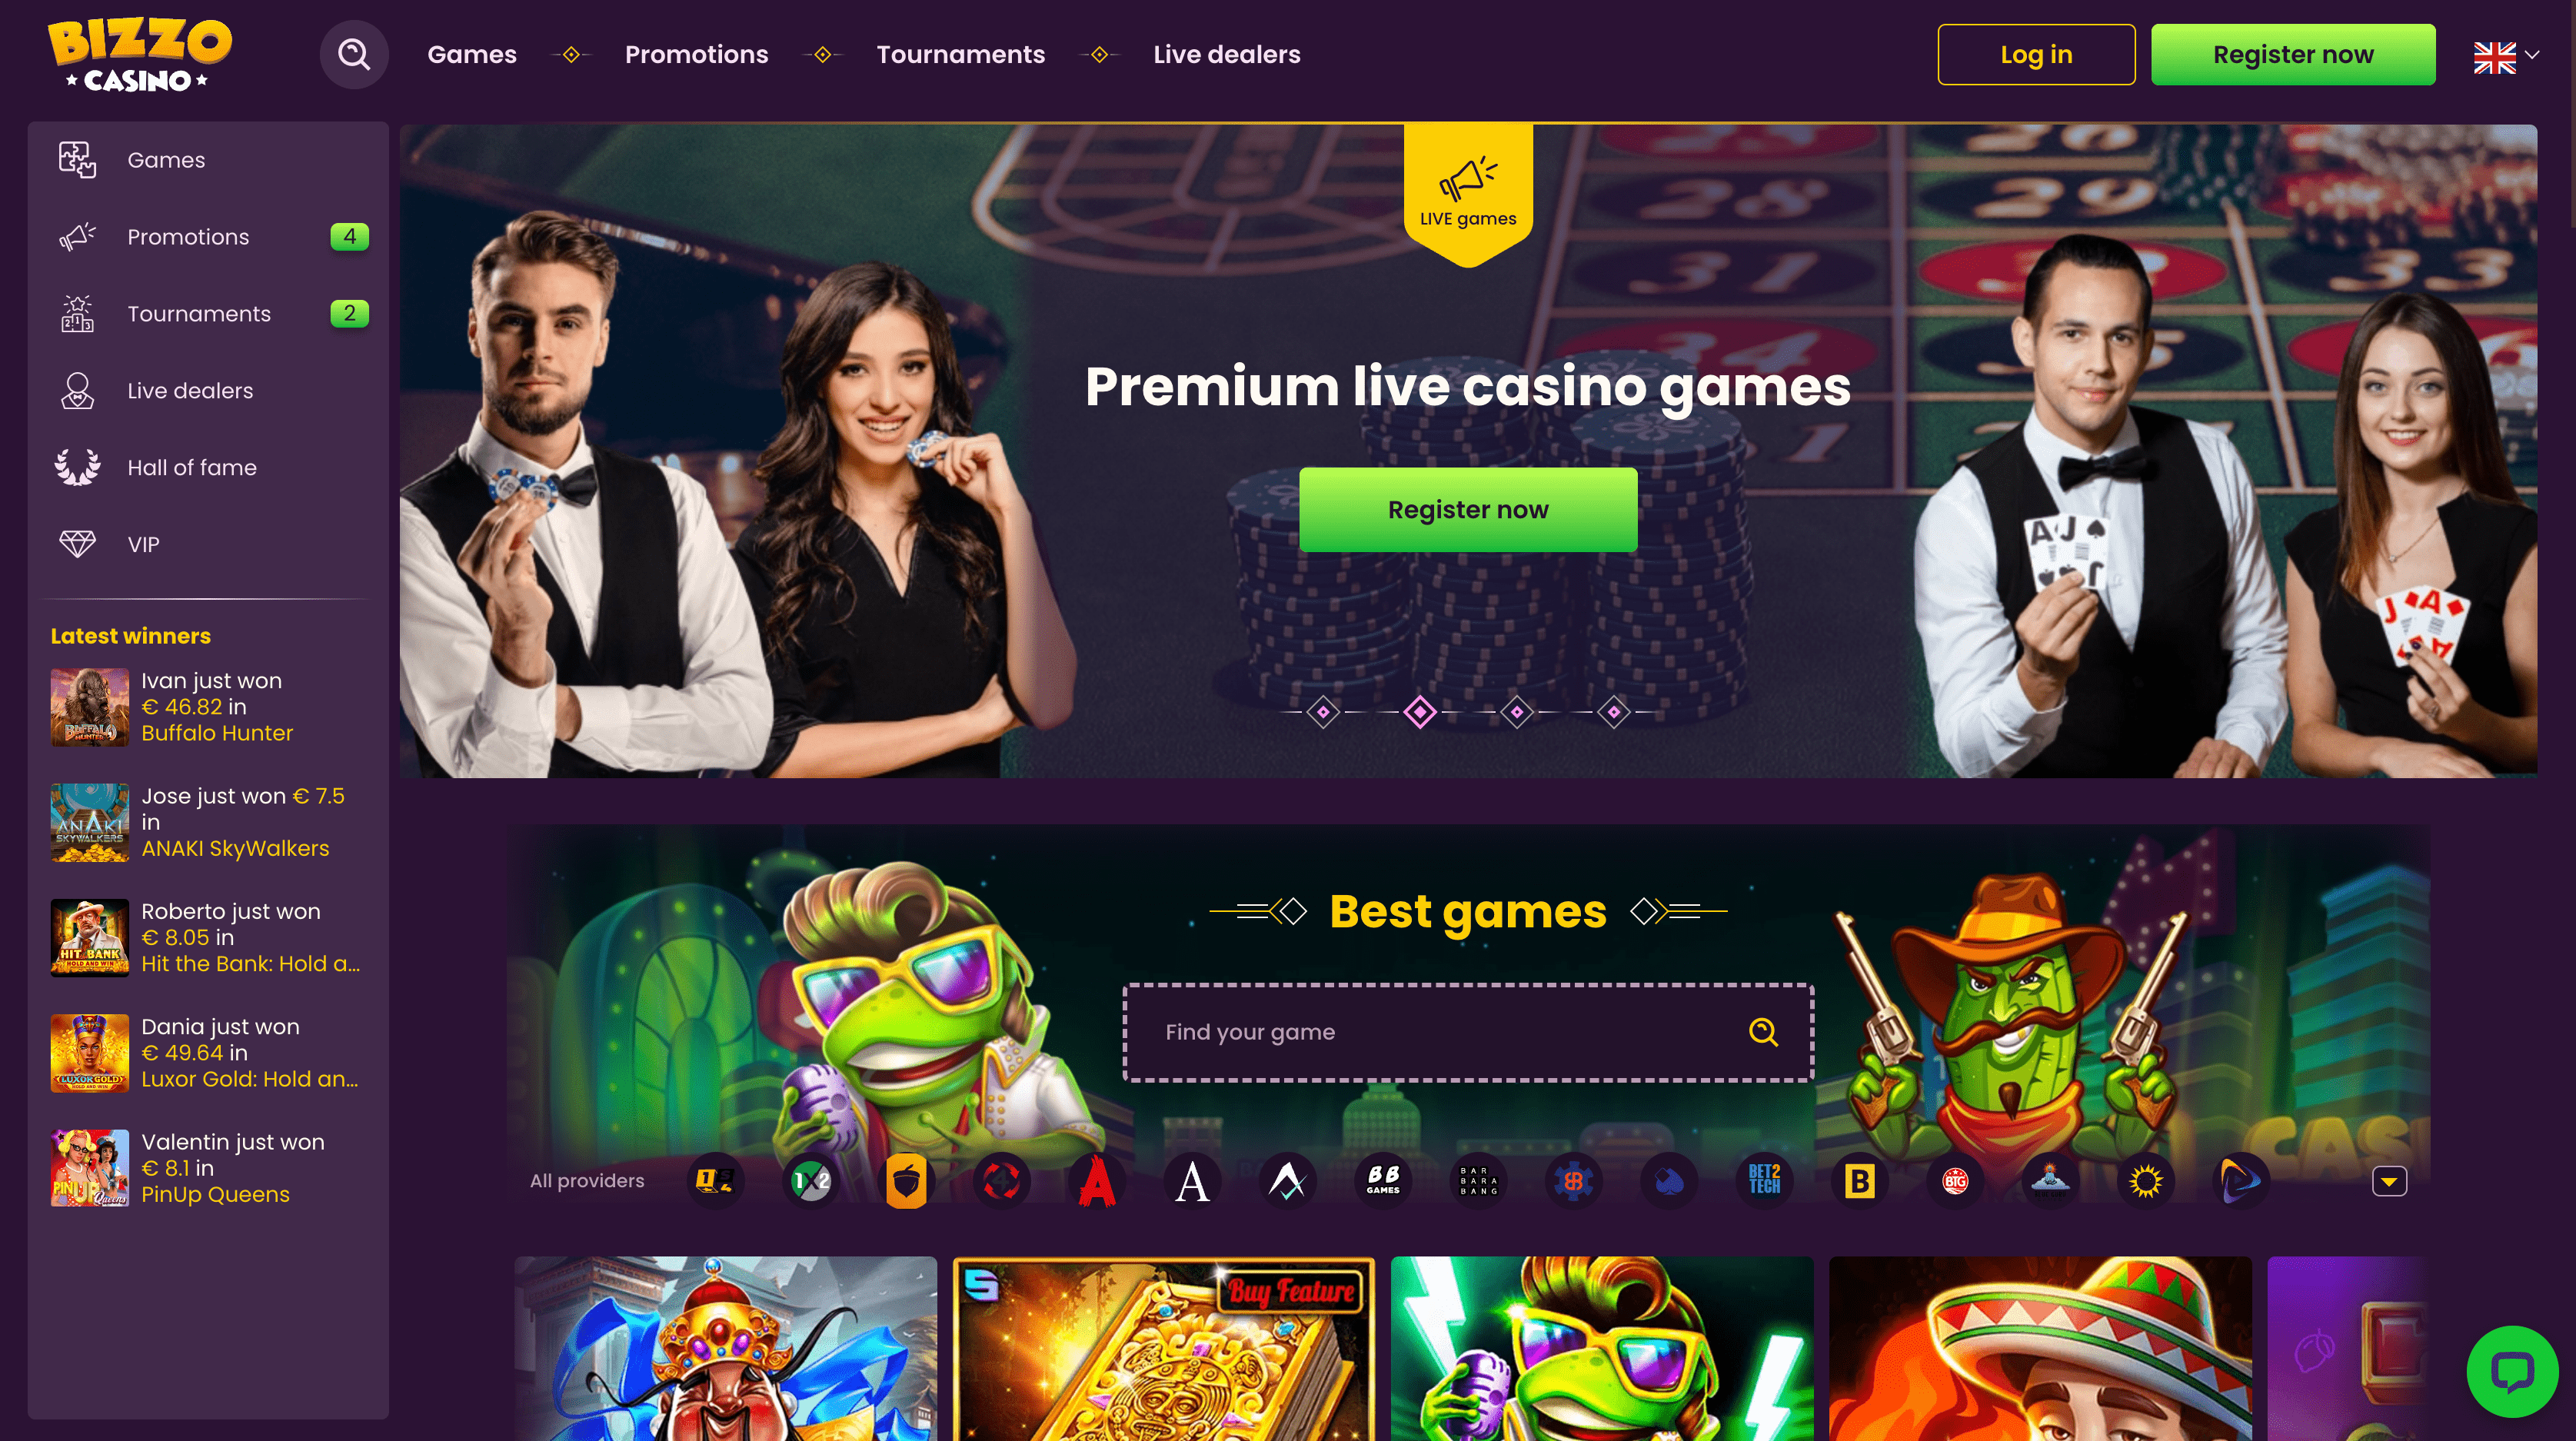 Bizzo Casino main page